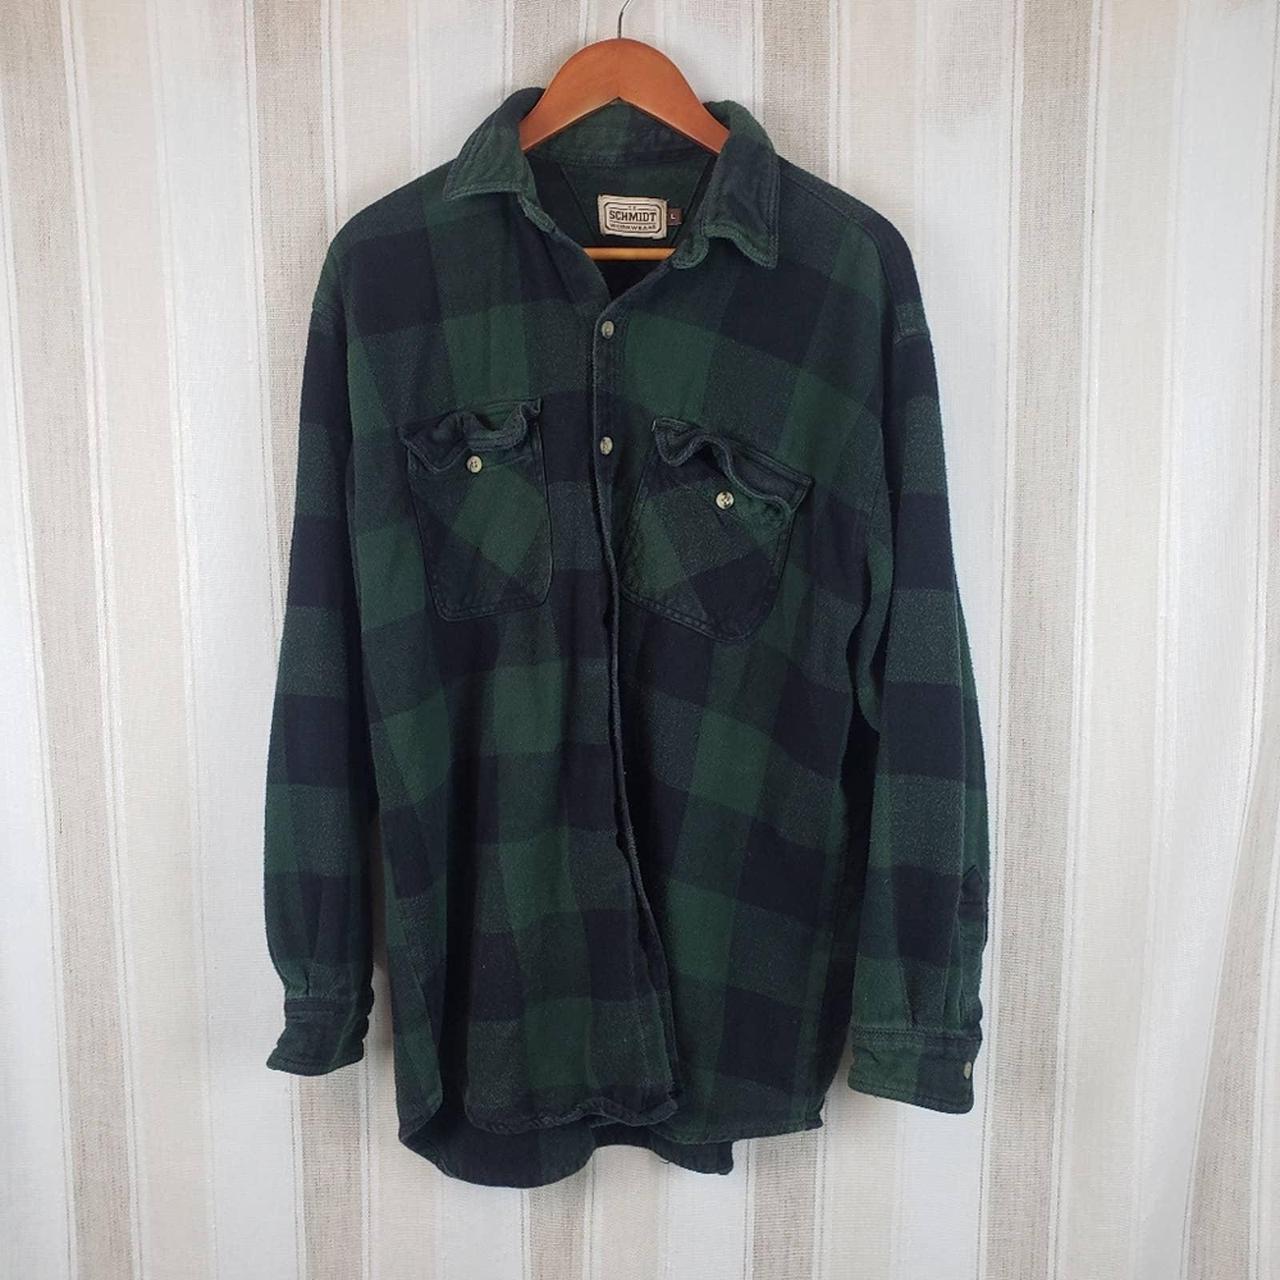 Schmidt Plaid Flannel Shirt Jacket Shacket Green... - Depop